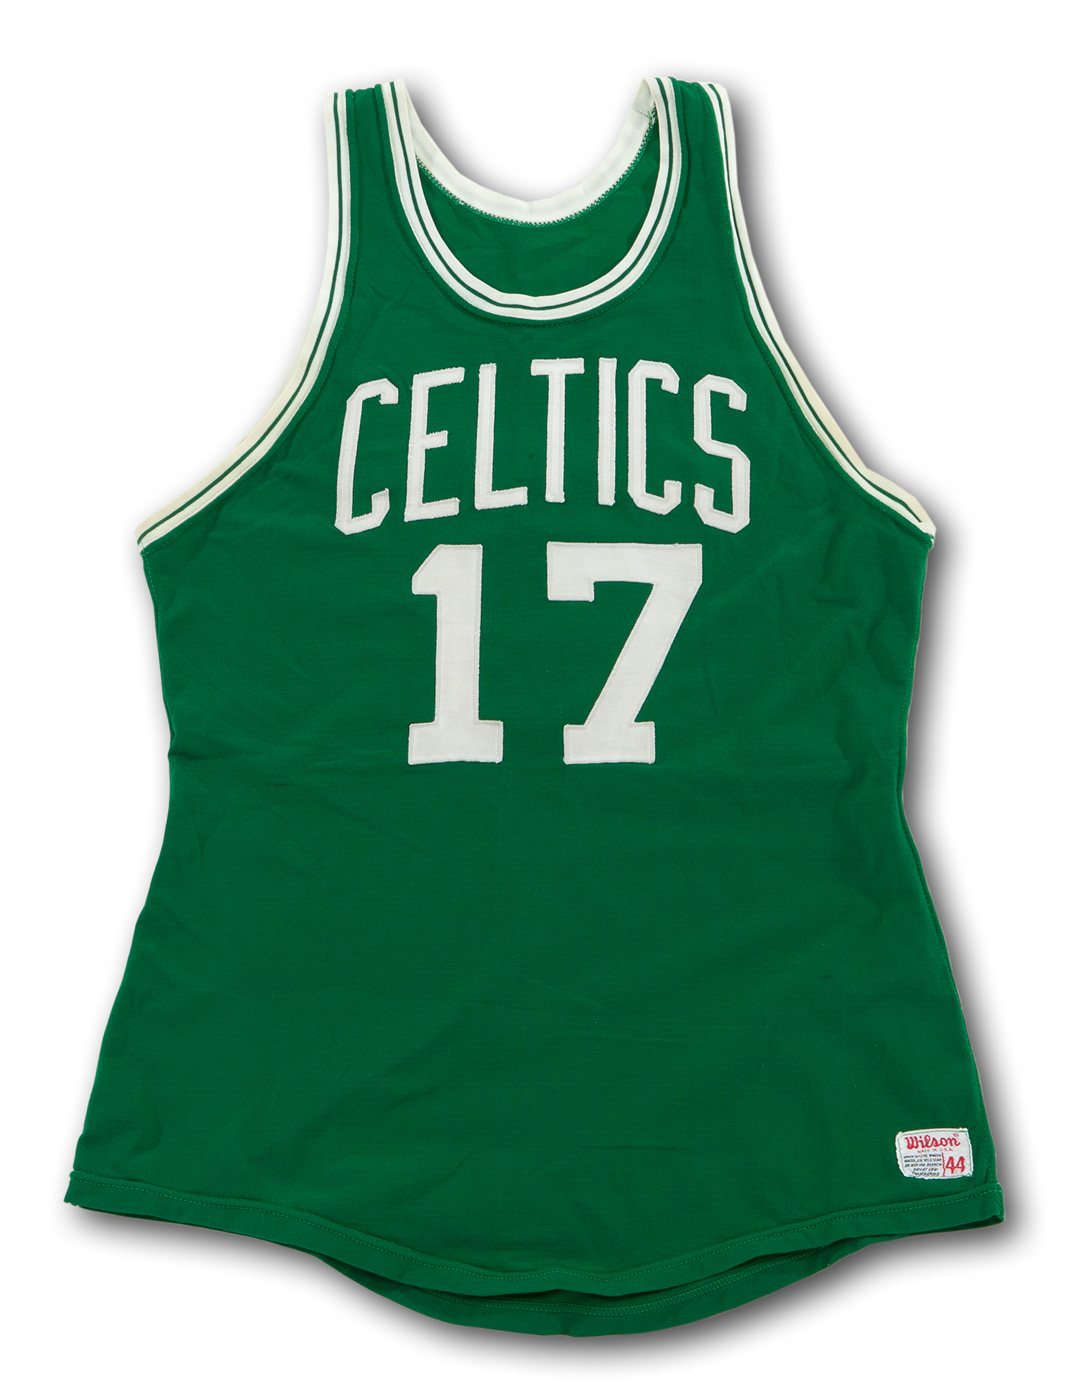 2010-11 Boston Celtics Game Worn St. Patrick's Day Jerseys Lot of, Lot  #51454